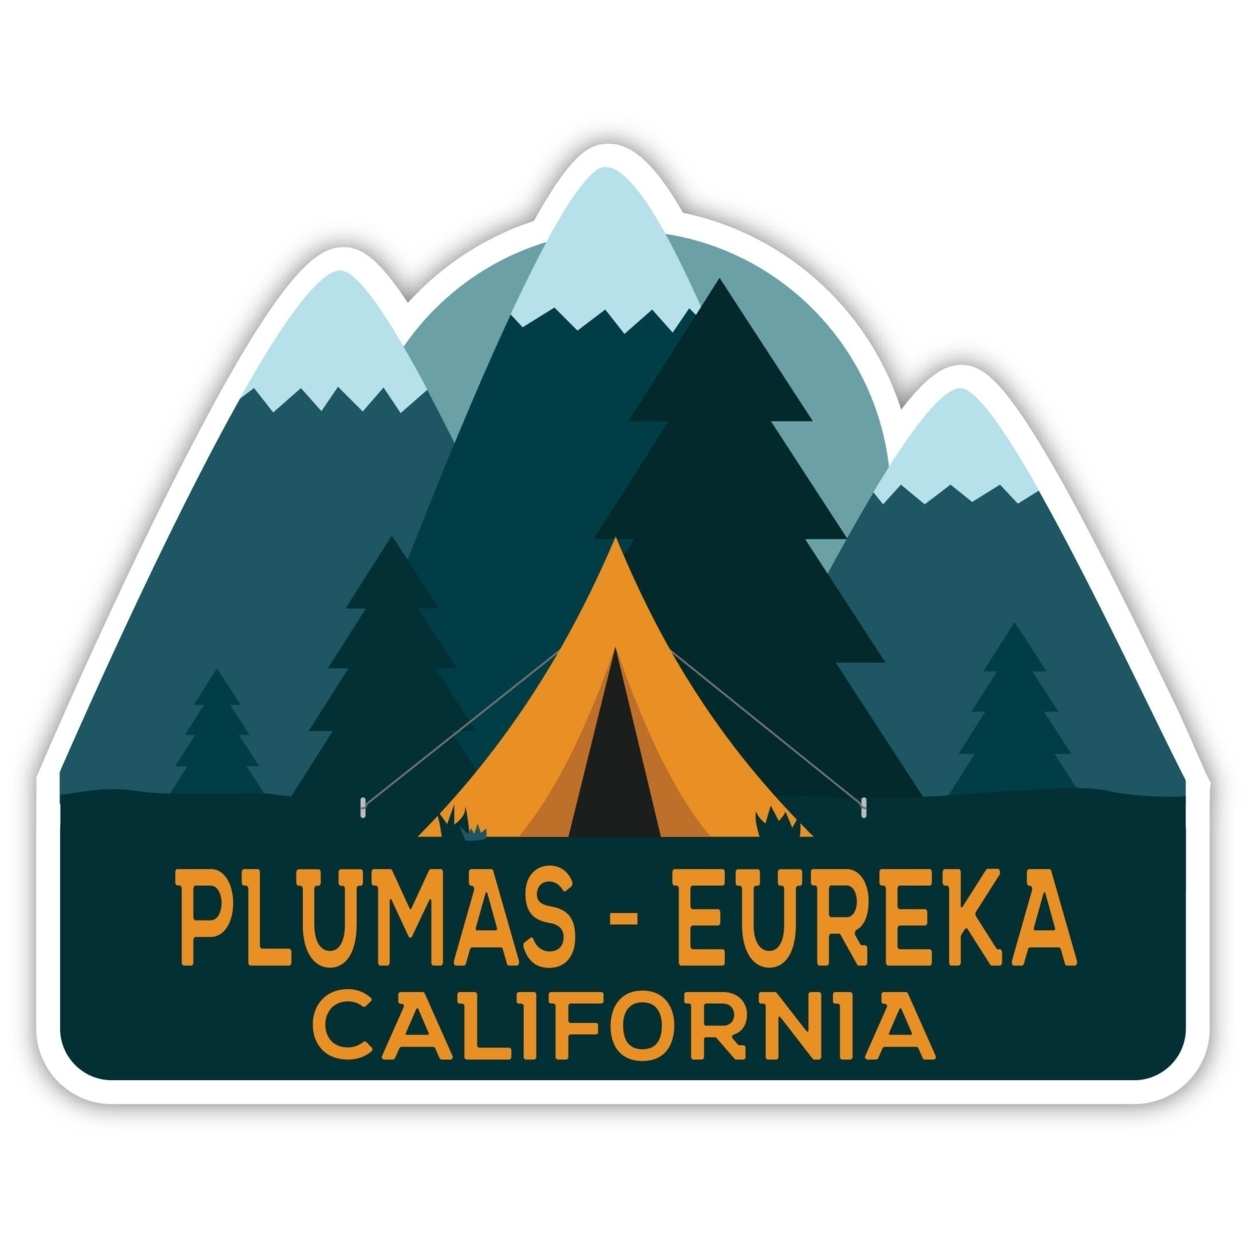 Plumas - Eureka California Souvenir Decorative Stickers (Choose Theme And Size) - Single Unit, 2-Inch, Tent